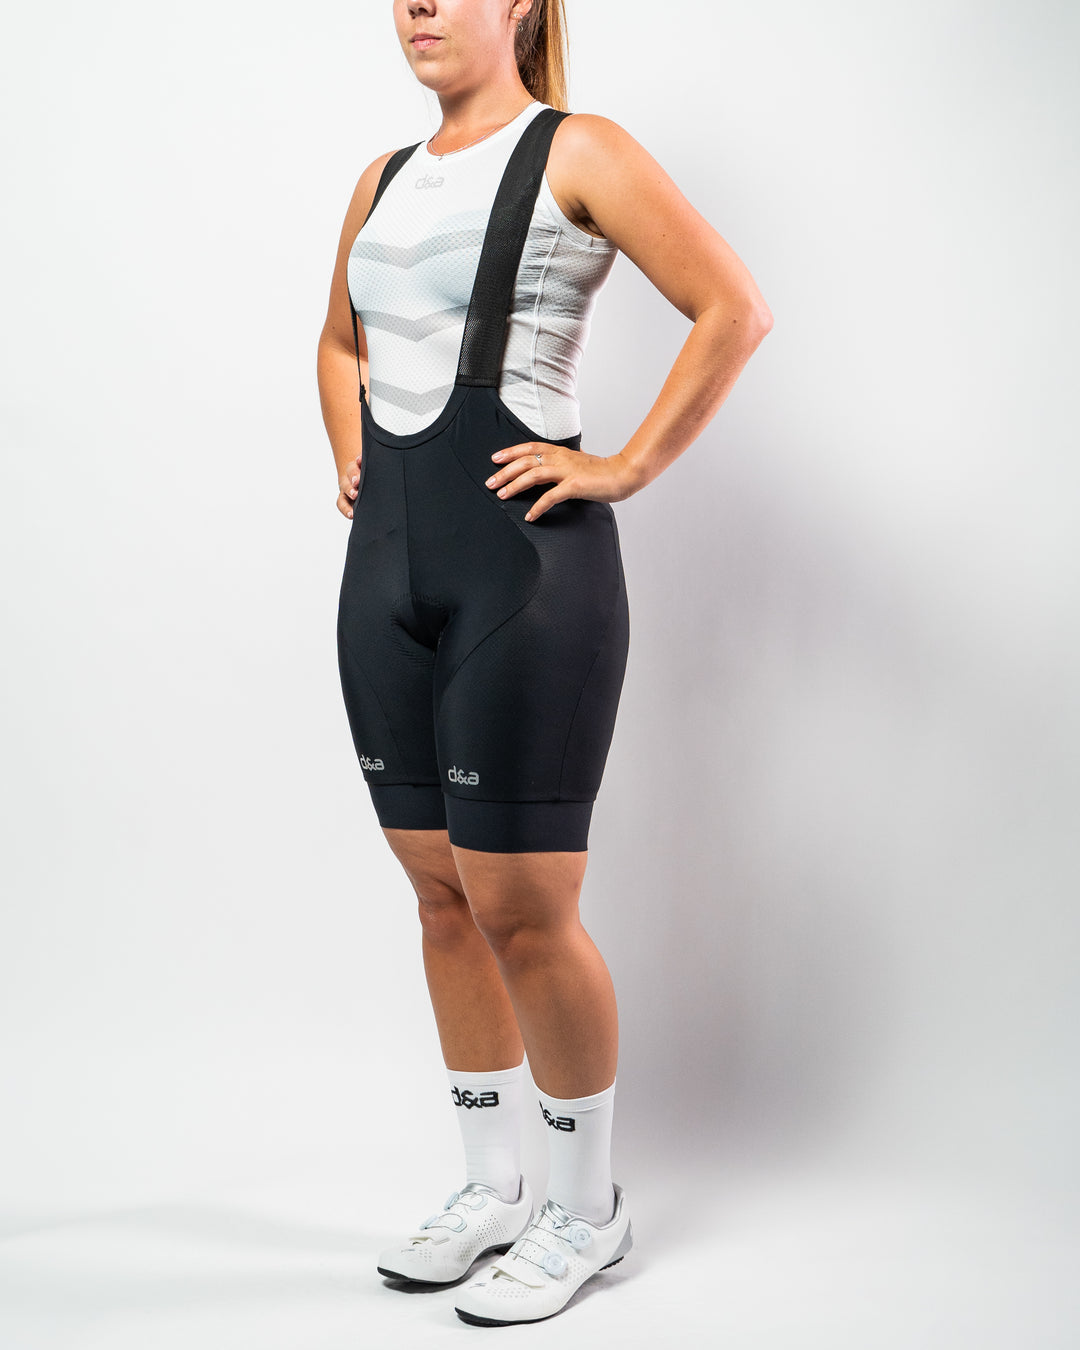 D&amp;A - Race Cycling Shorts Women